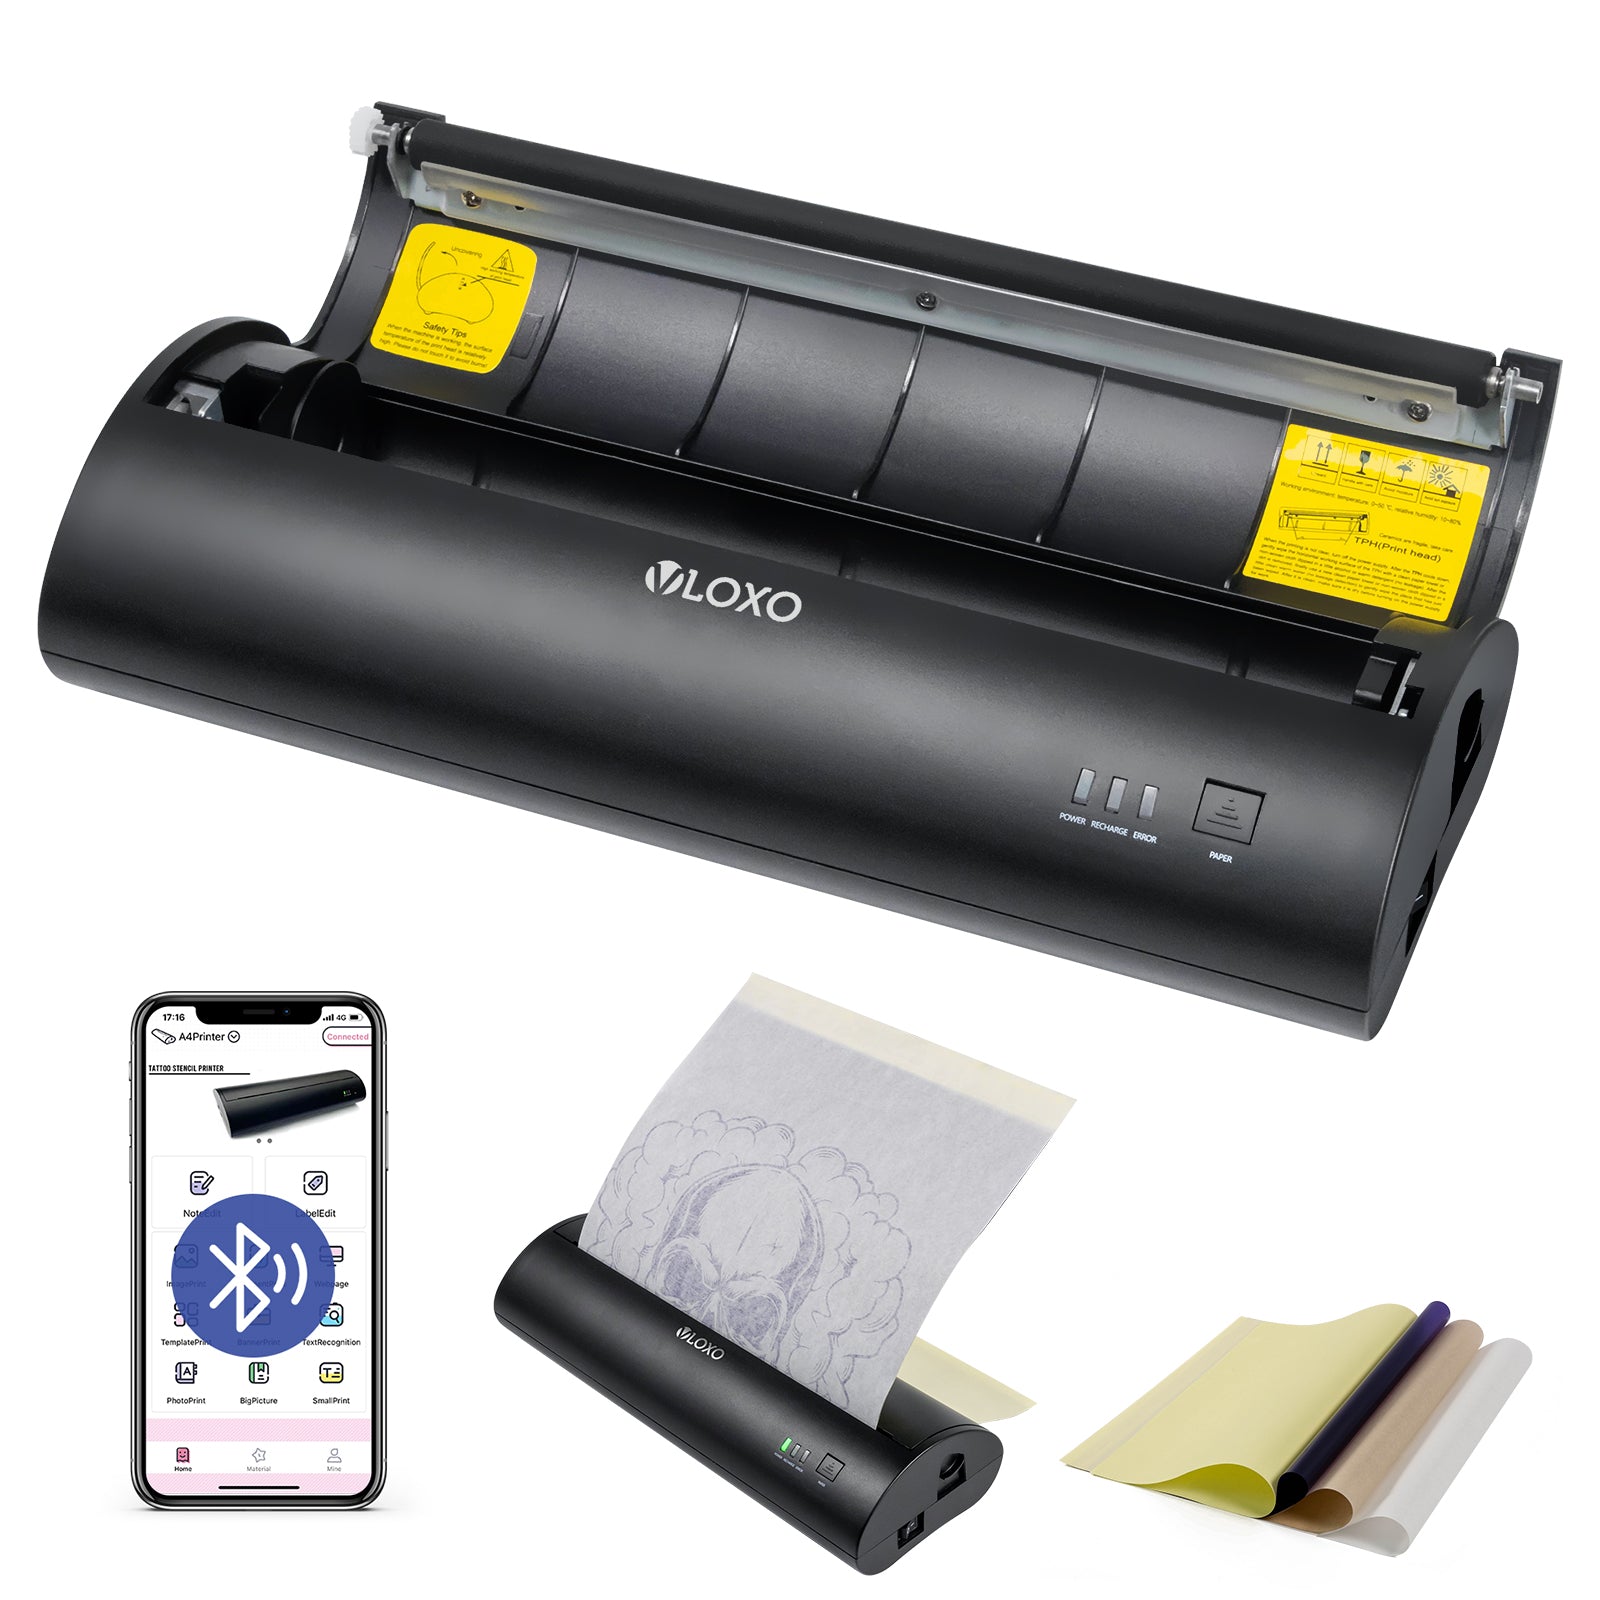 A4 Wireless Tattoo Stencil Printer – Bluetooth-Enabled Thermal Printing